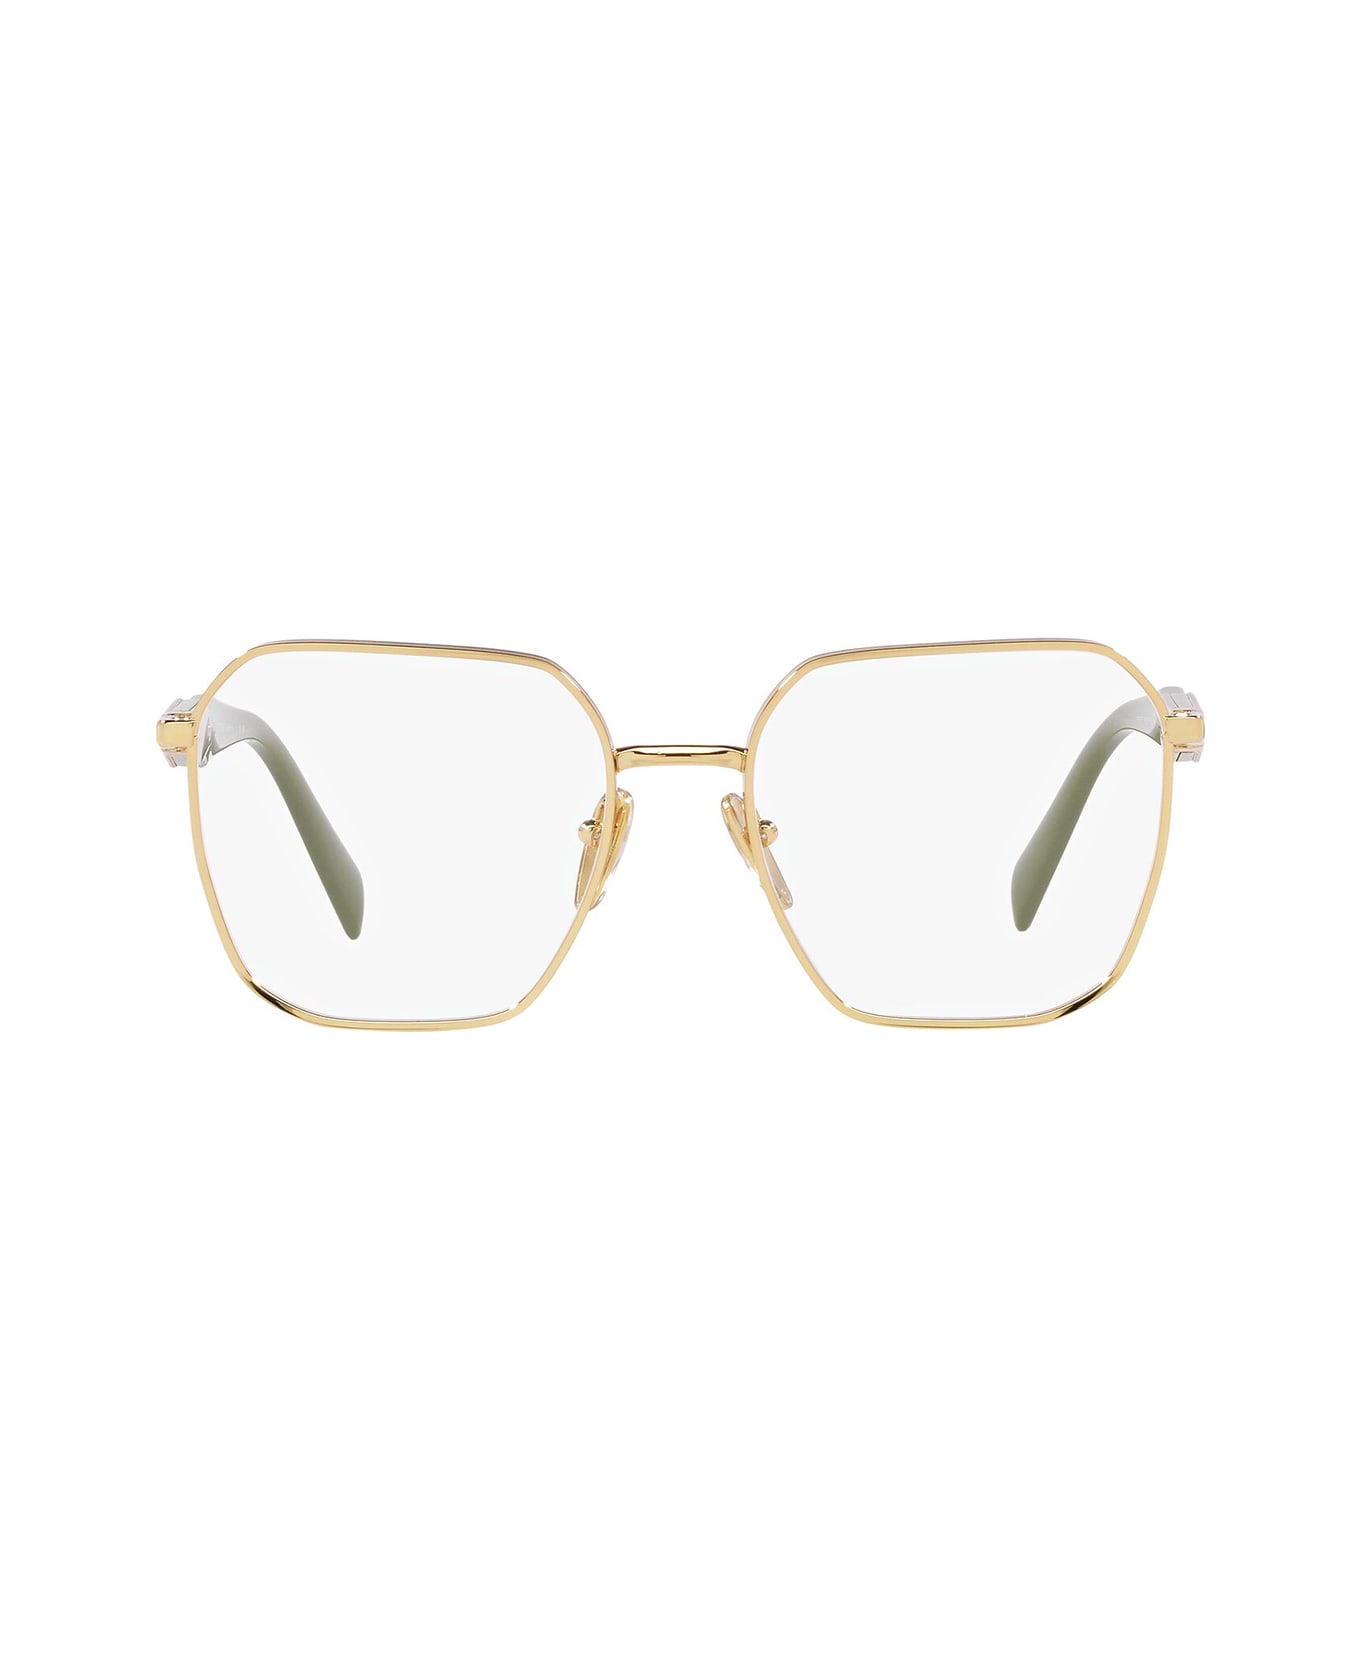 Prada Eyewear Pr 56zv Gold Glasses - Gold